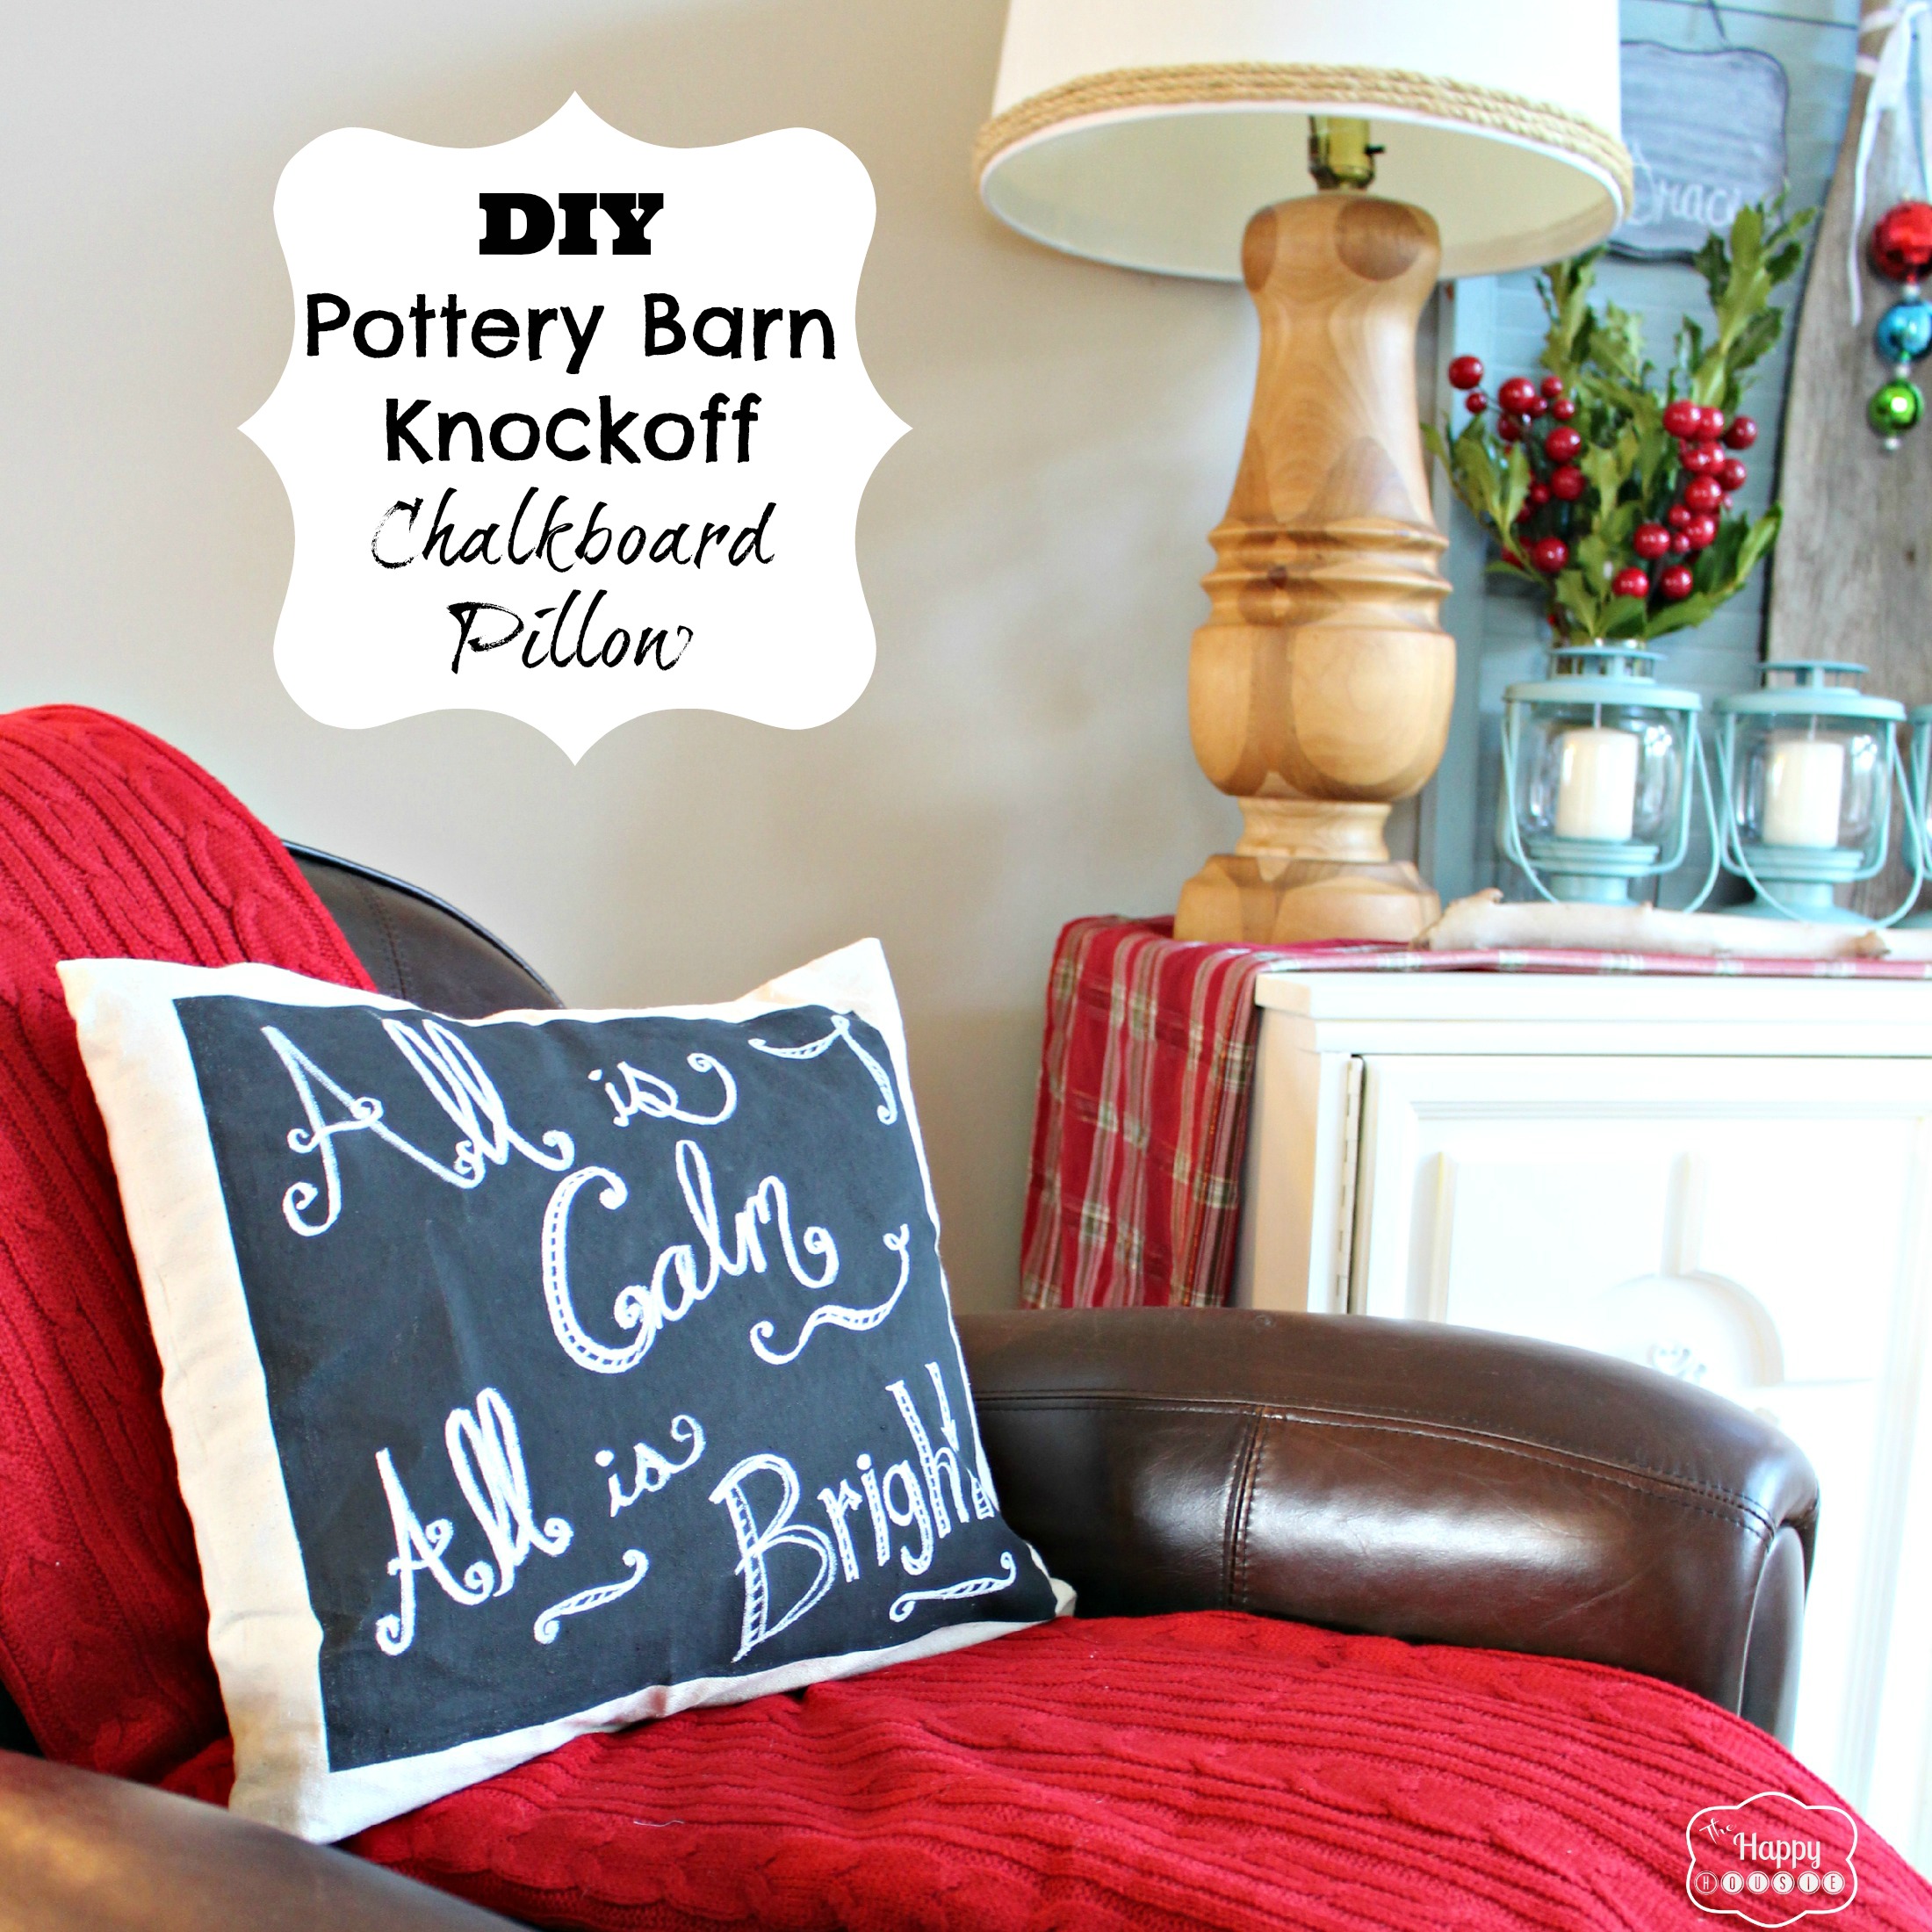 DIY Chalkboard Pillow {Pottery Barn Christmas Knockoff}